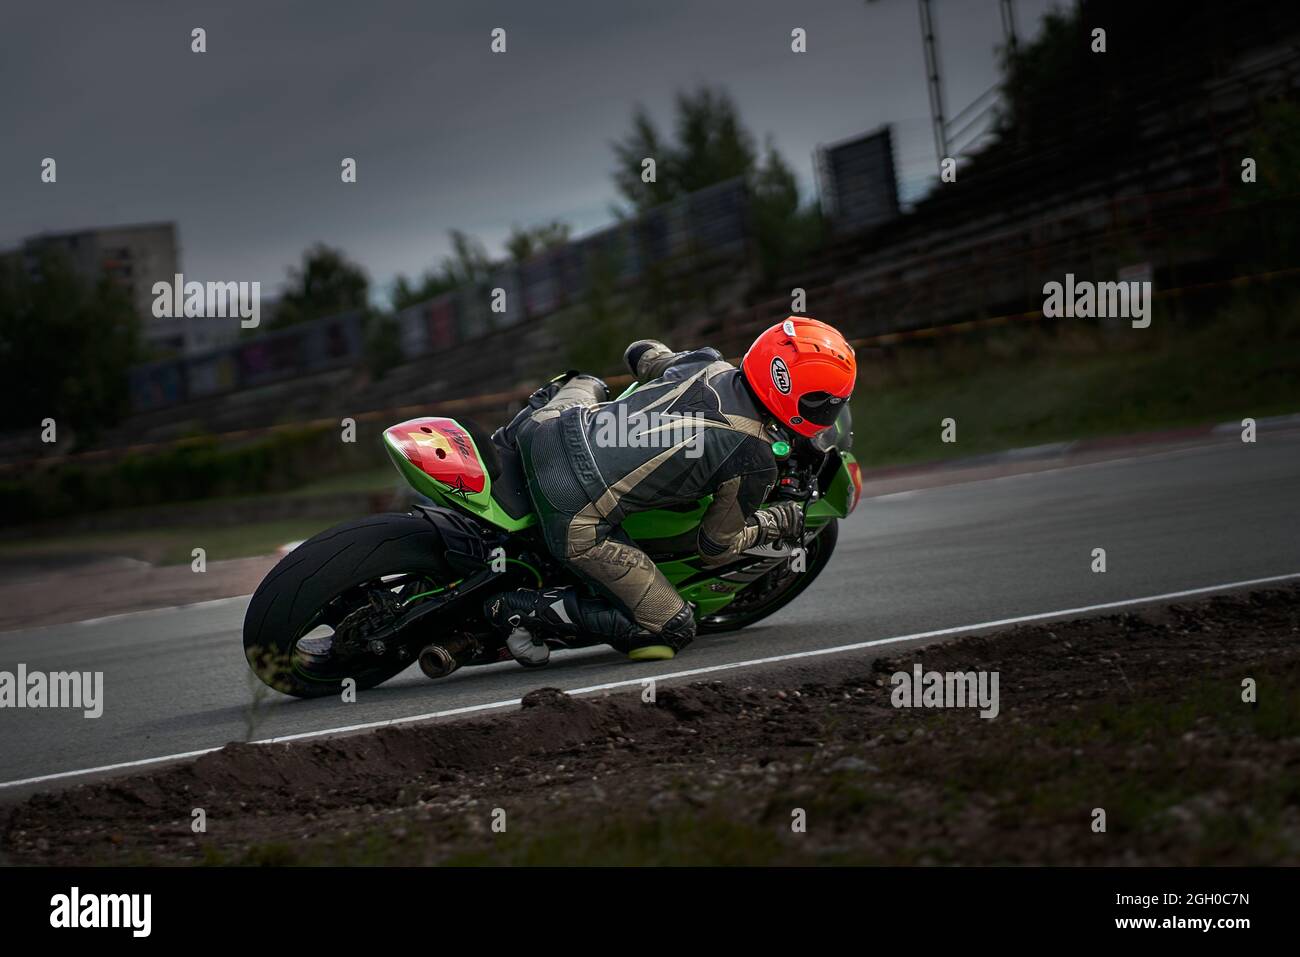 10-05-2021 Litauen, Kaunas MotoGP-Fahrer, Motorradfahrer fährt auf schnellem Sportfahrrad. Stockfoto